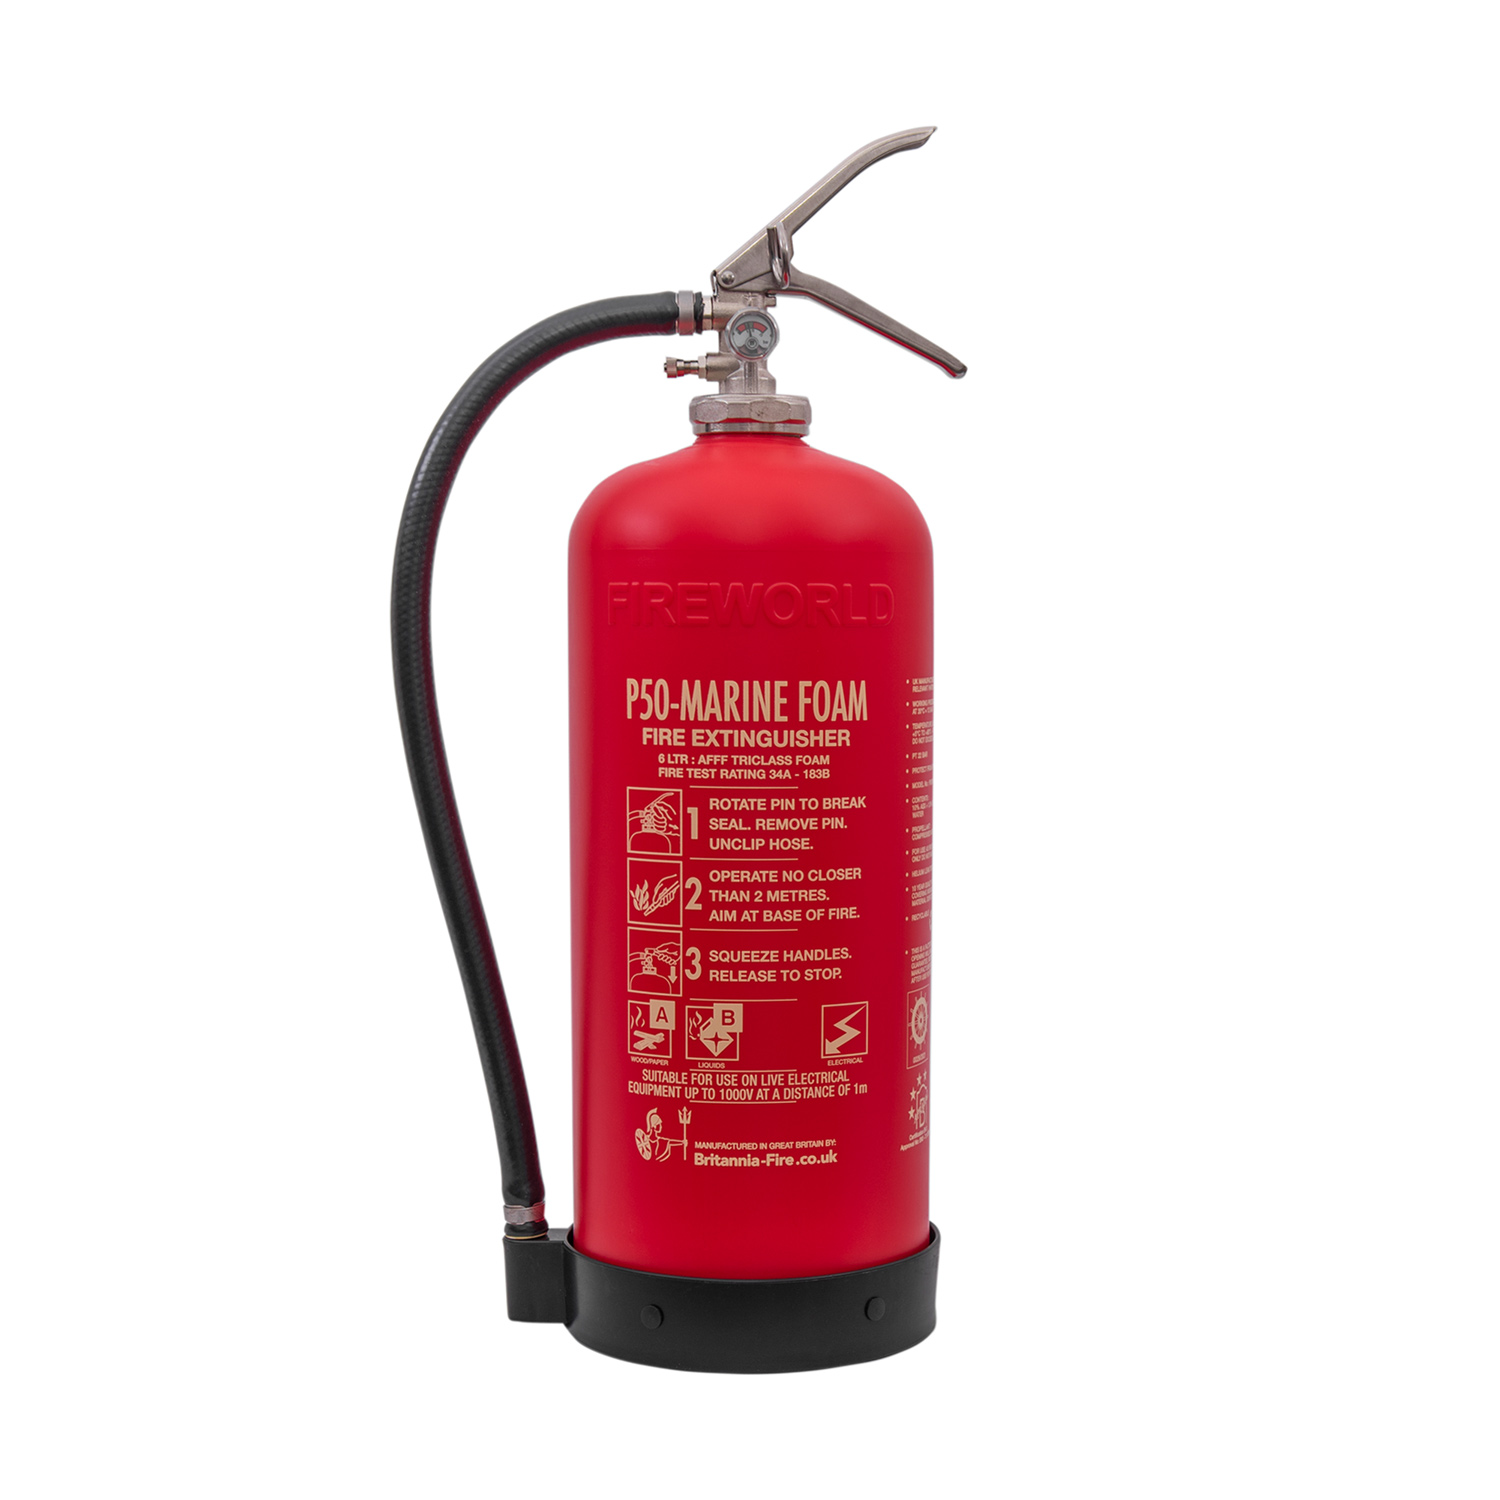 Image of the P50 MED 6ltr Foam Fire Extinguisher